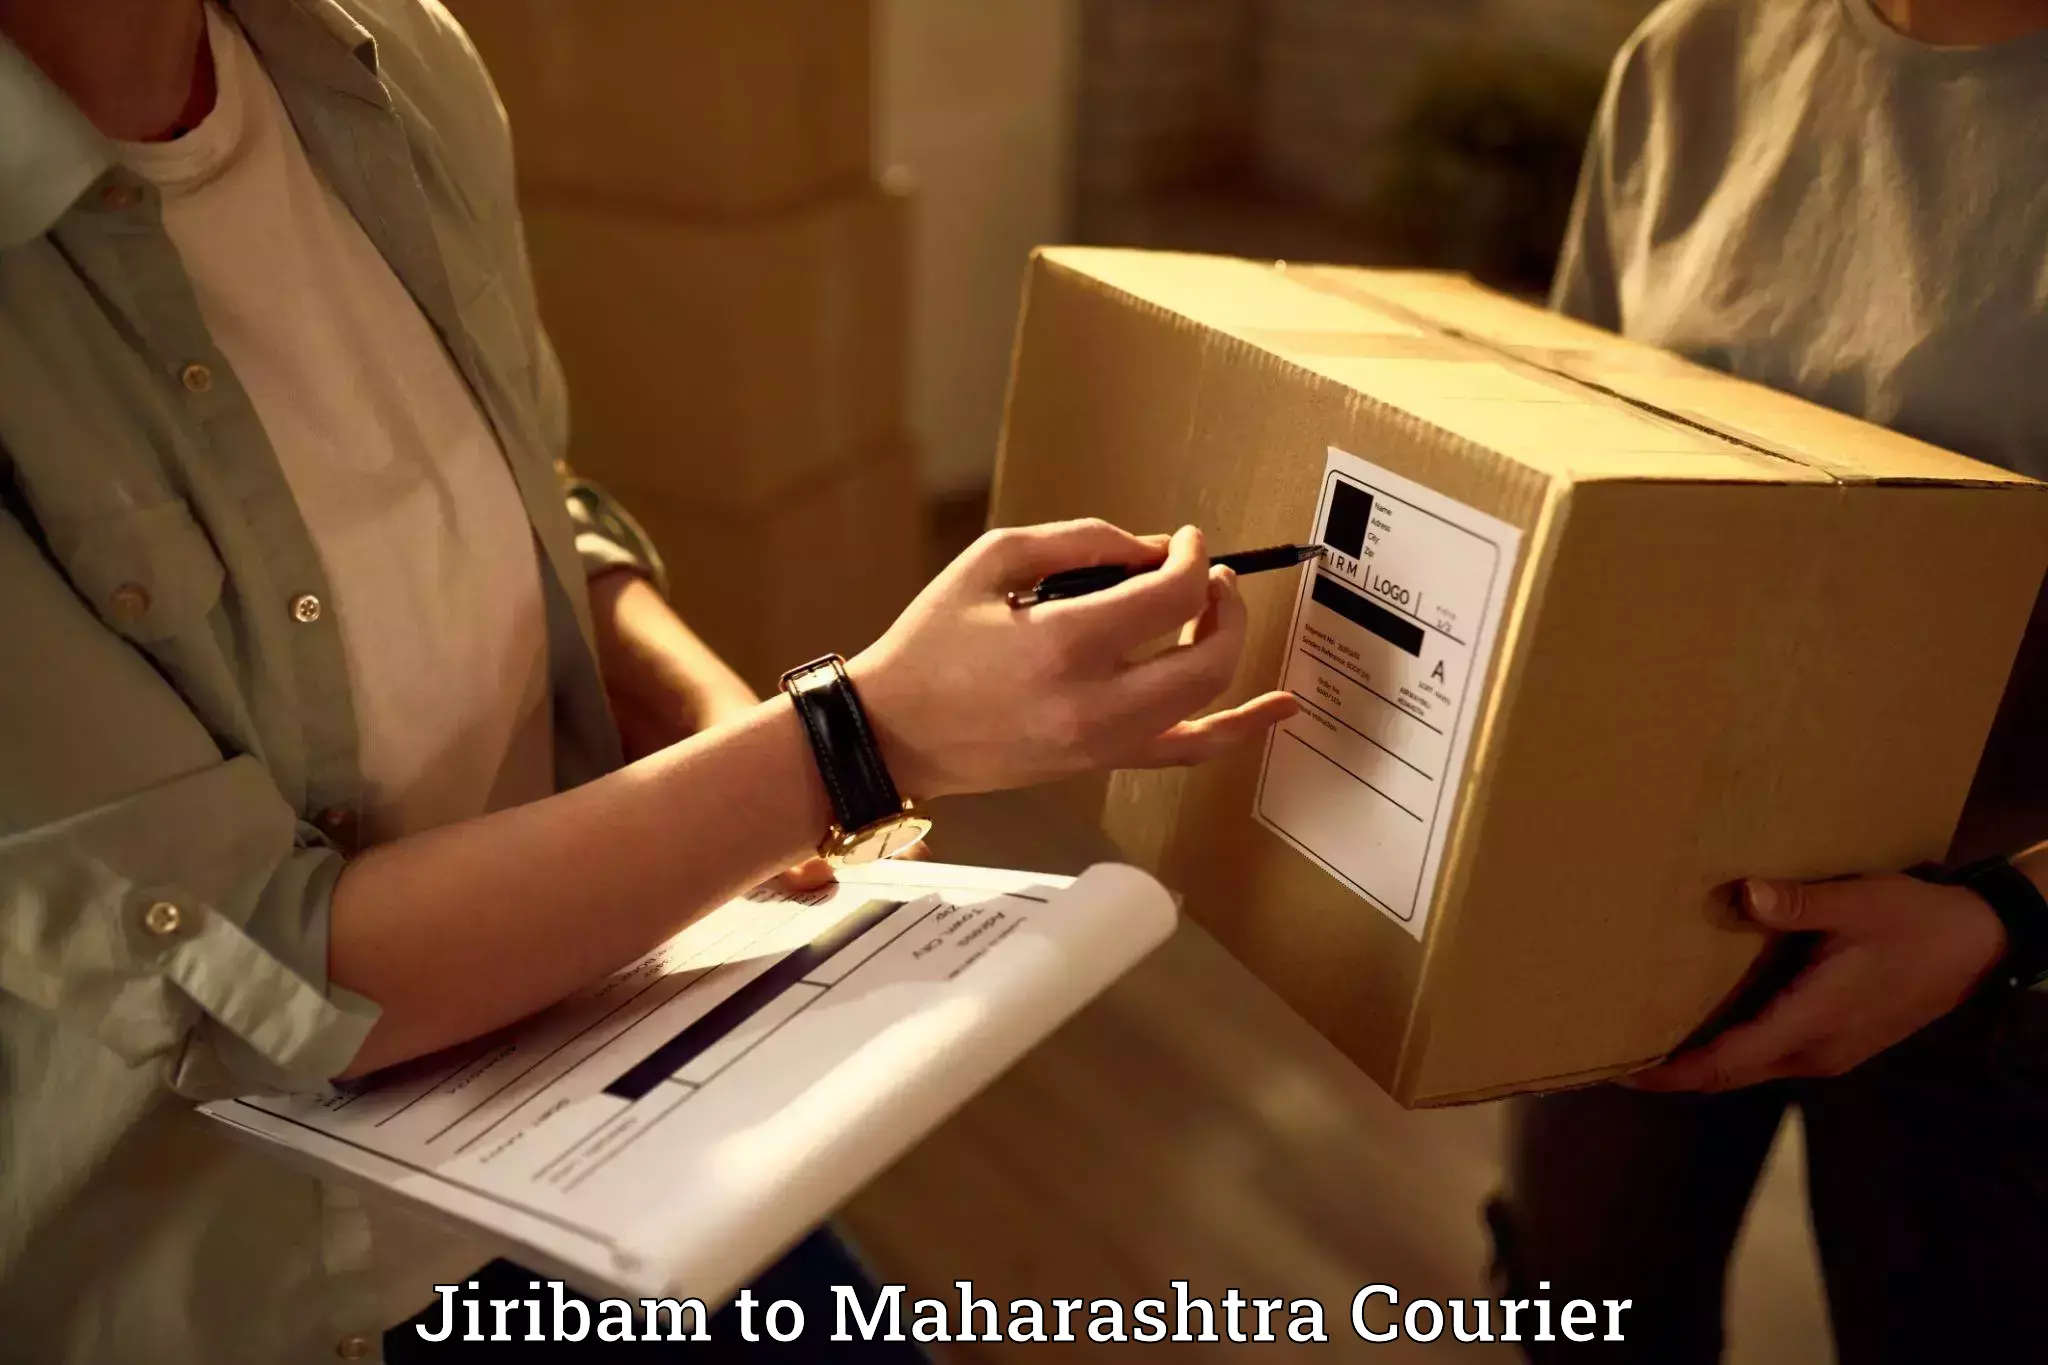 Furniture delivery service Jiribam to Maharashtra